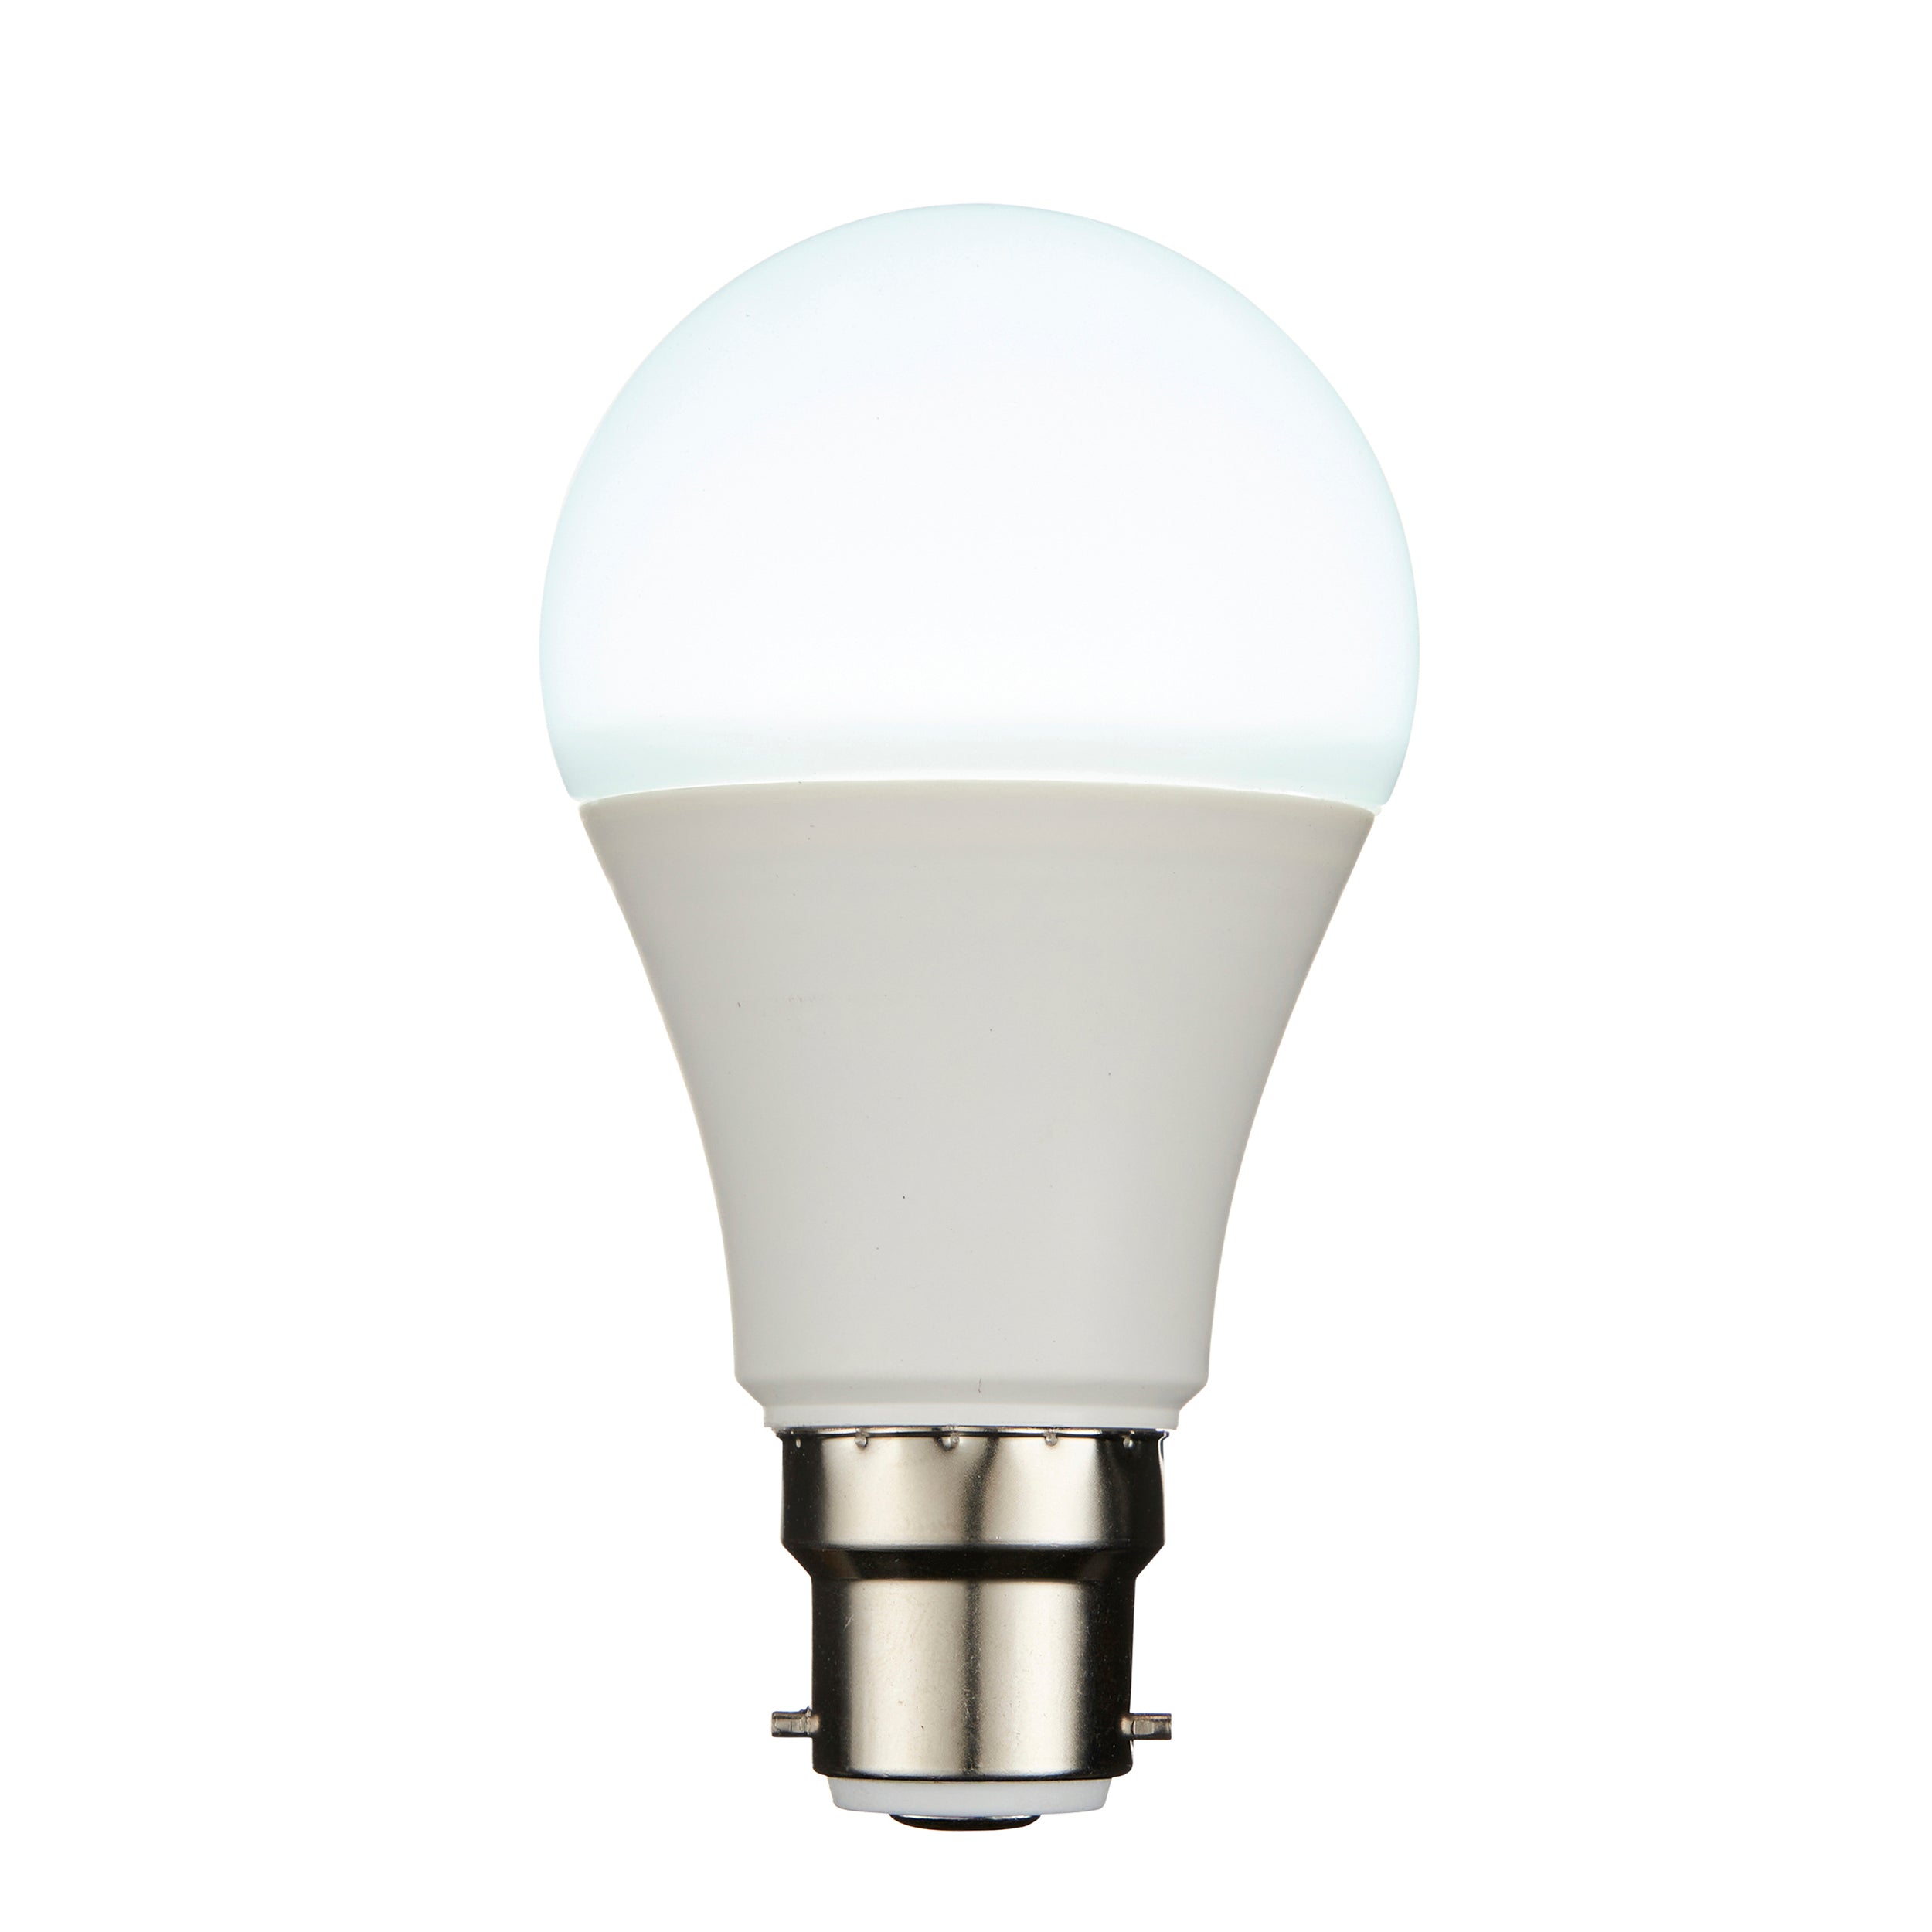 Saxby Lighting B22 LED GLS 11W 101341